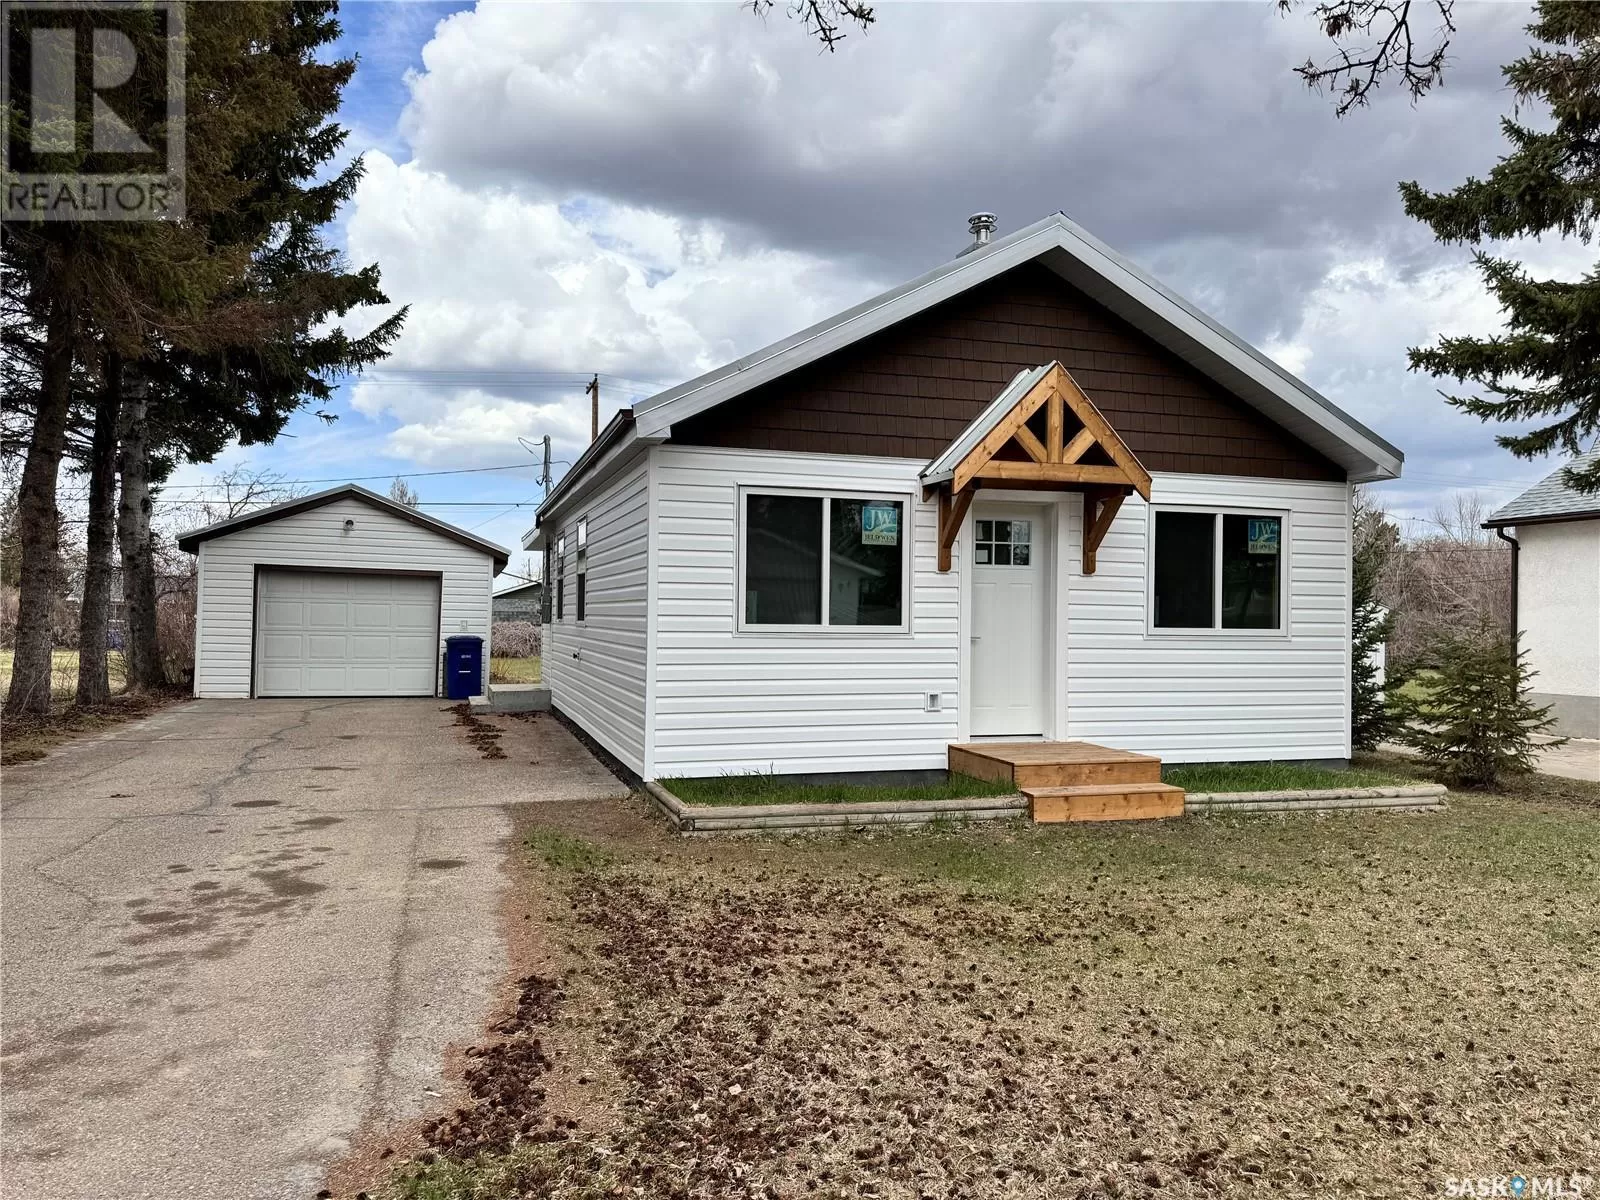 House for rent: 704 B Avenue E, Wynyard, Saskatchewan S0A 4T0